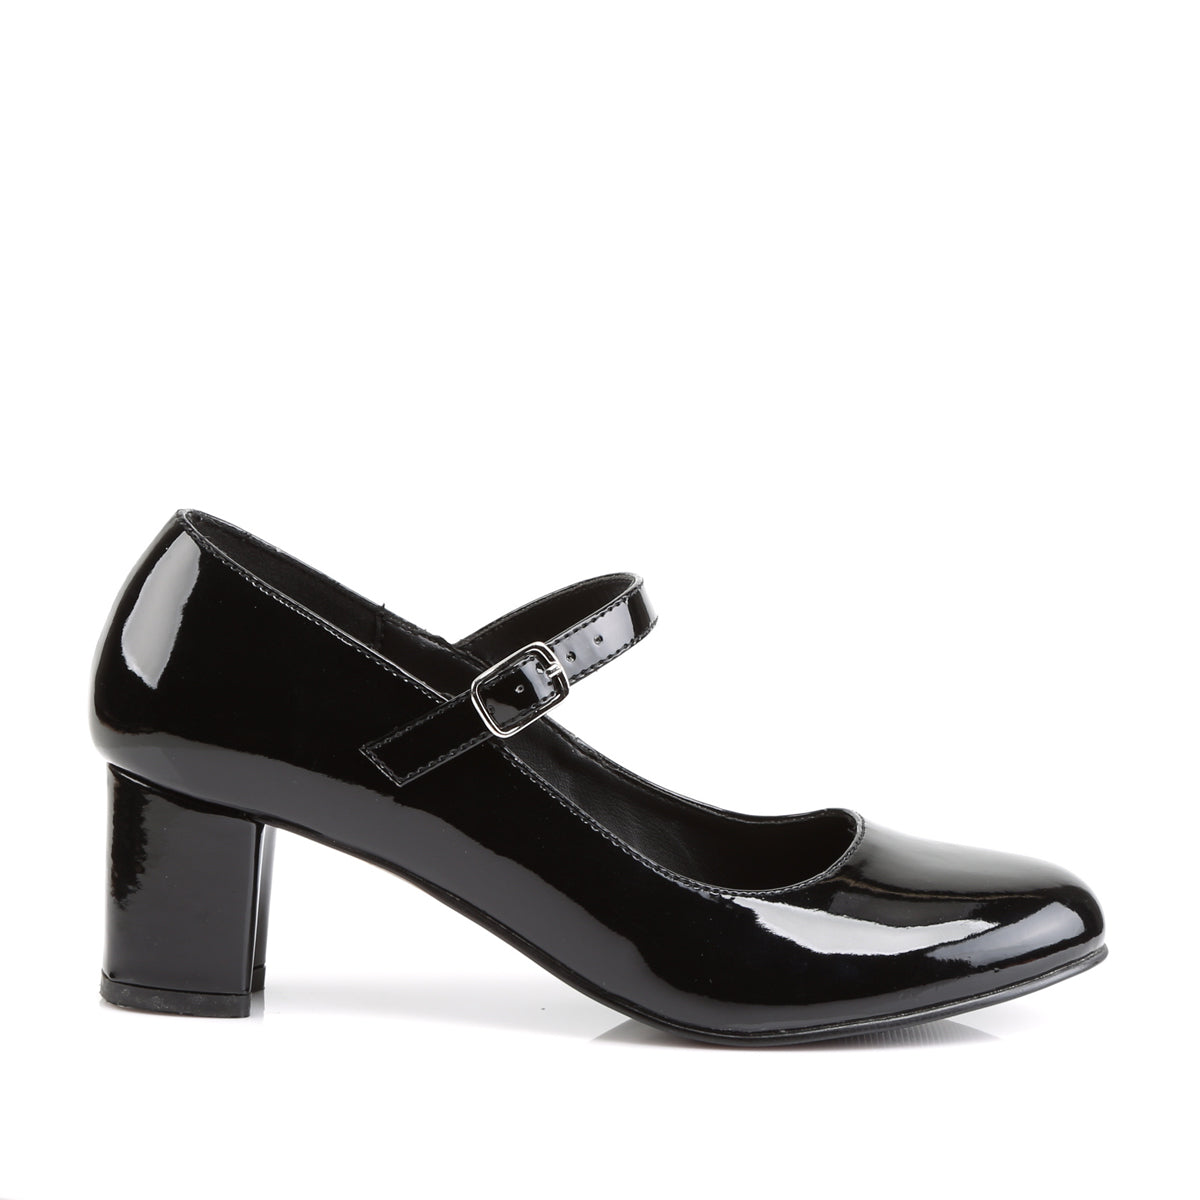 SCHOOLGIRL-50 Funtasma Fantasy Black Patent Women's Shoes [Fancy Dress Costume Shoes]